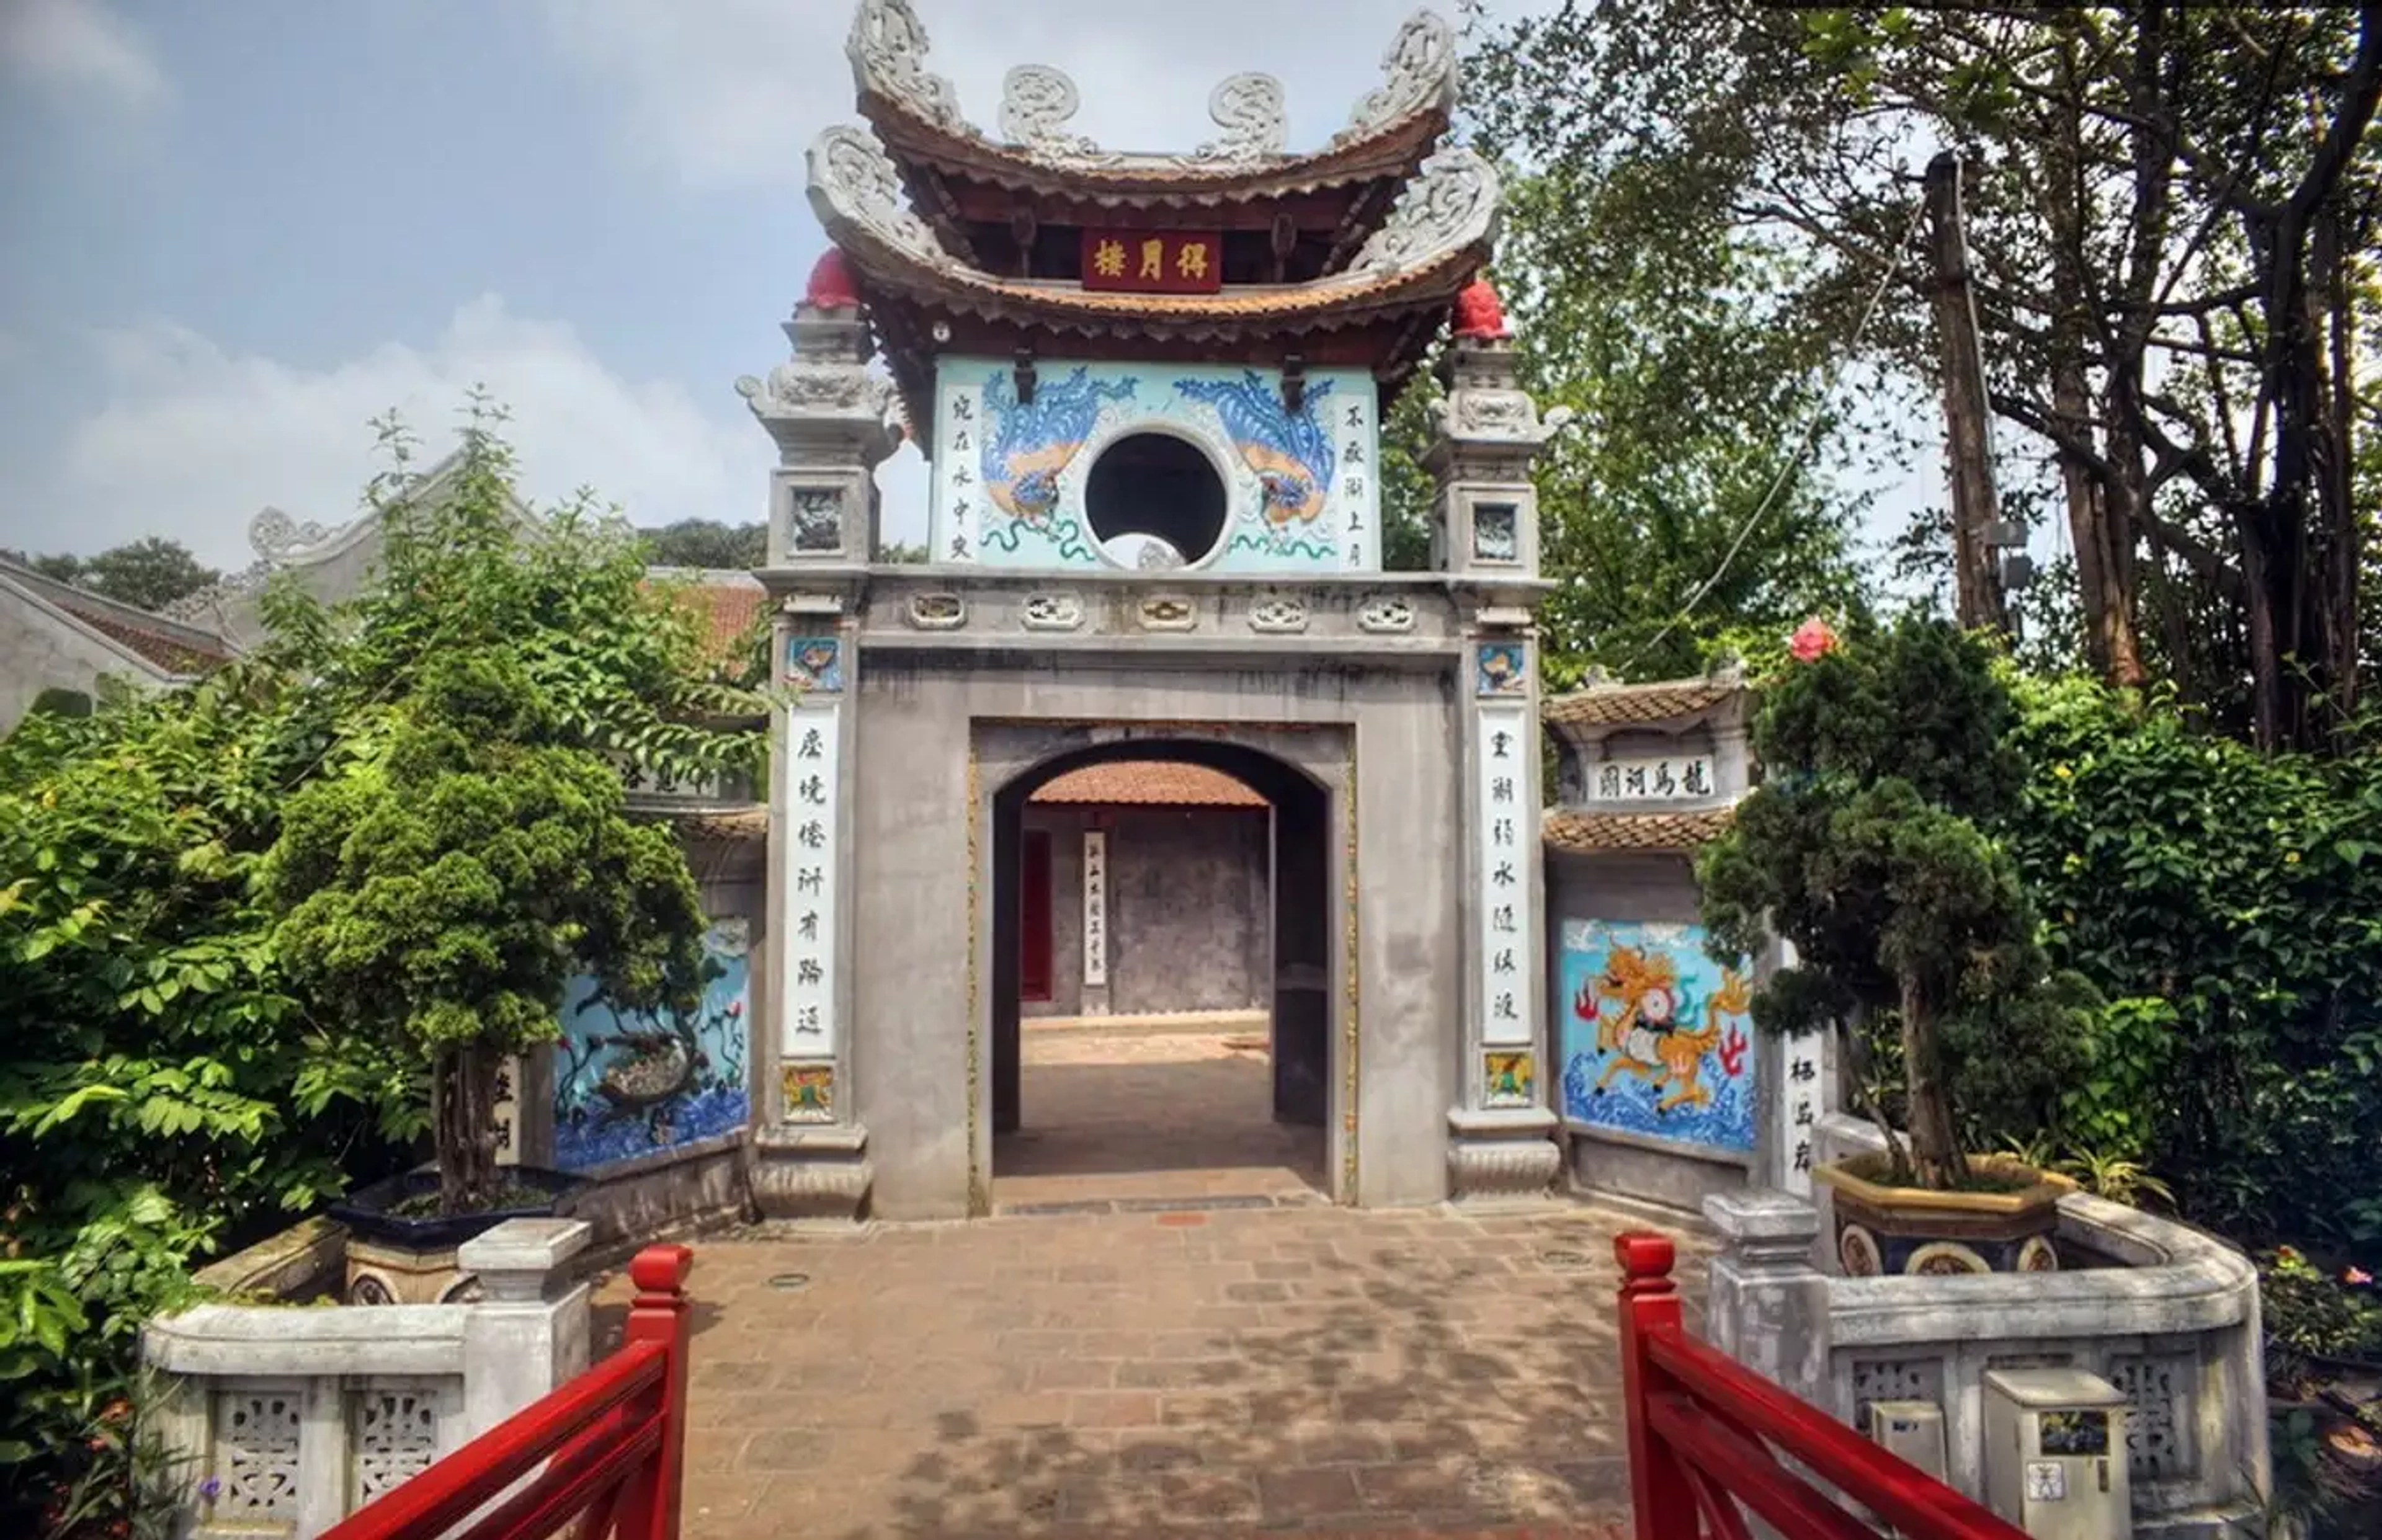 Ngoc Son Temple - Spiritual Cultural Symbol in the Heart of Hanoi